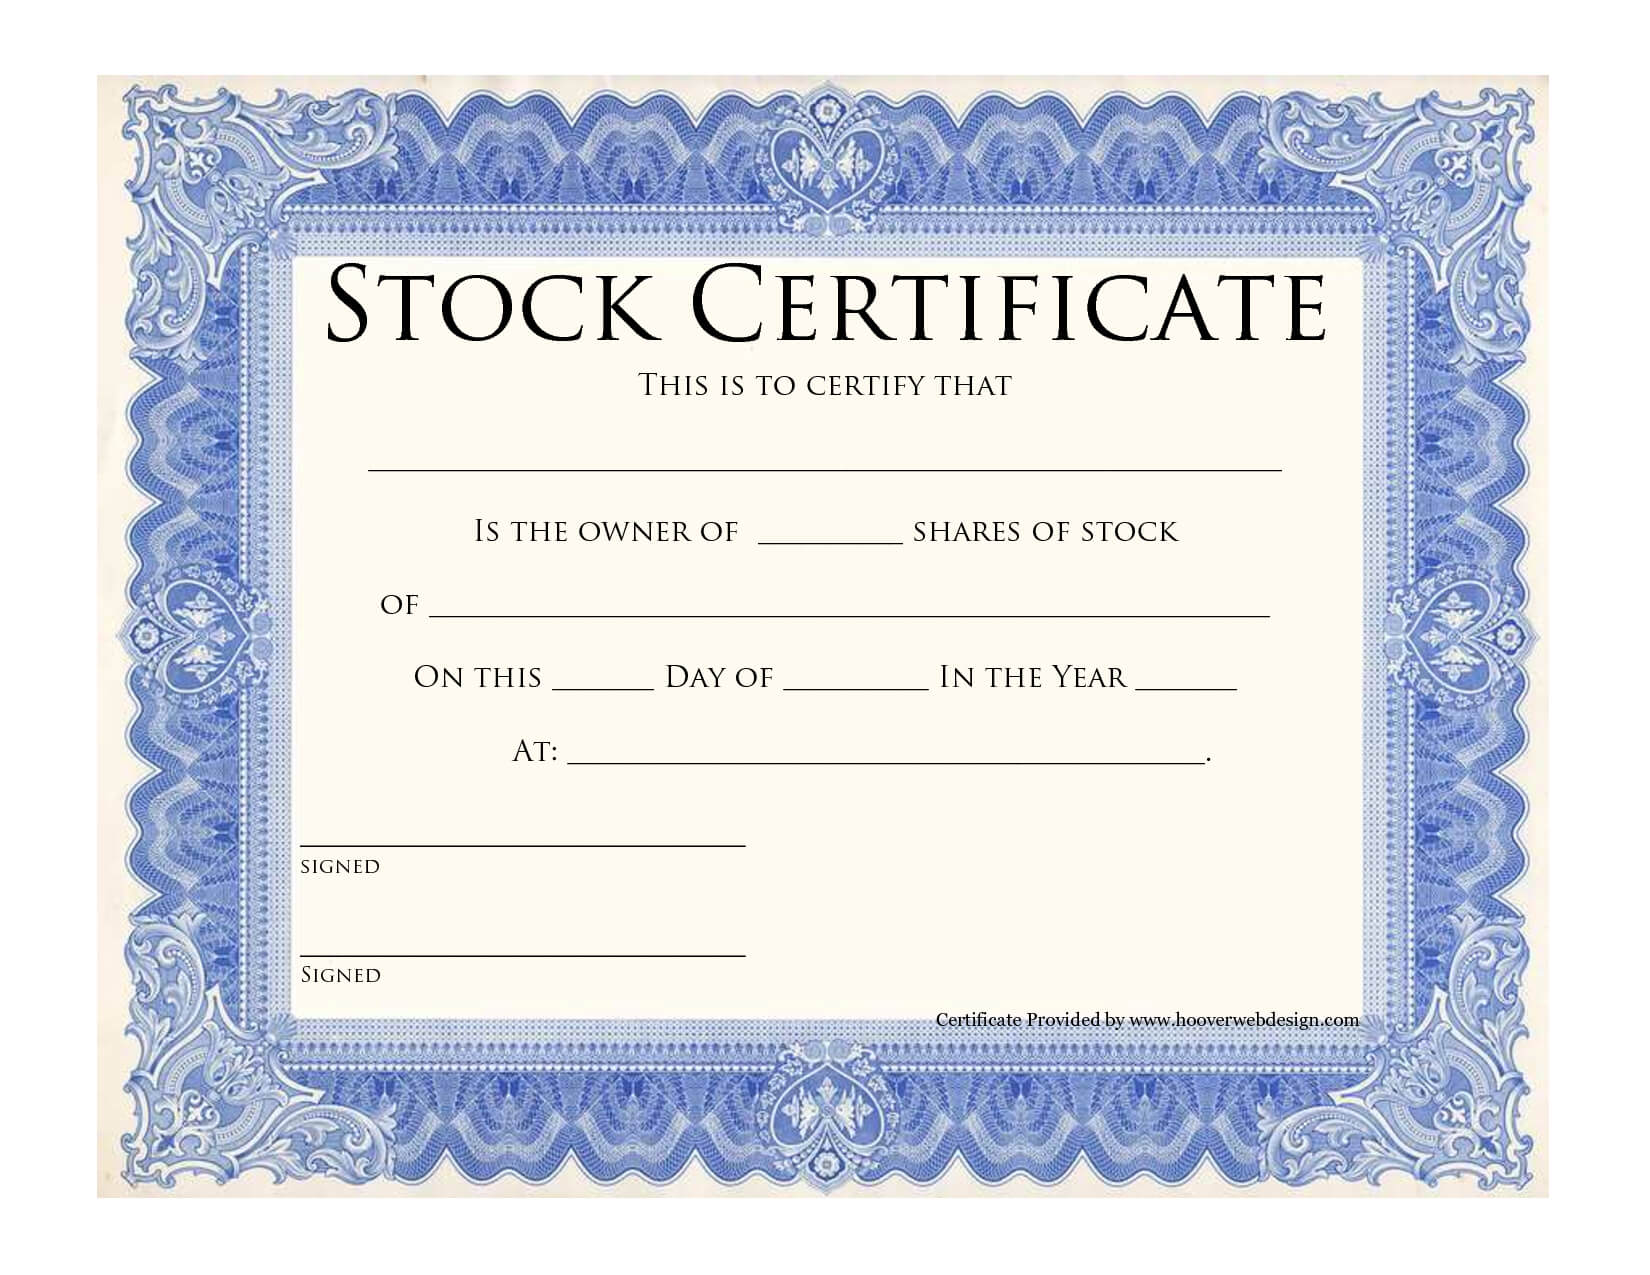 Blank Stock Certificate Template | Printable Stock Inside Free Stock Certificate Template Download